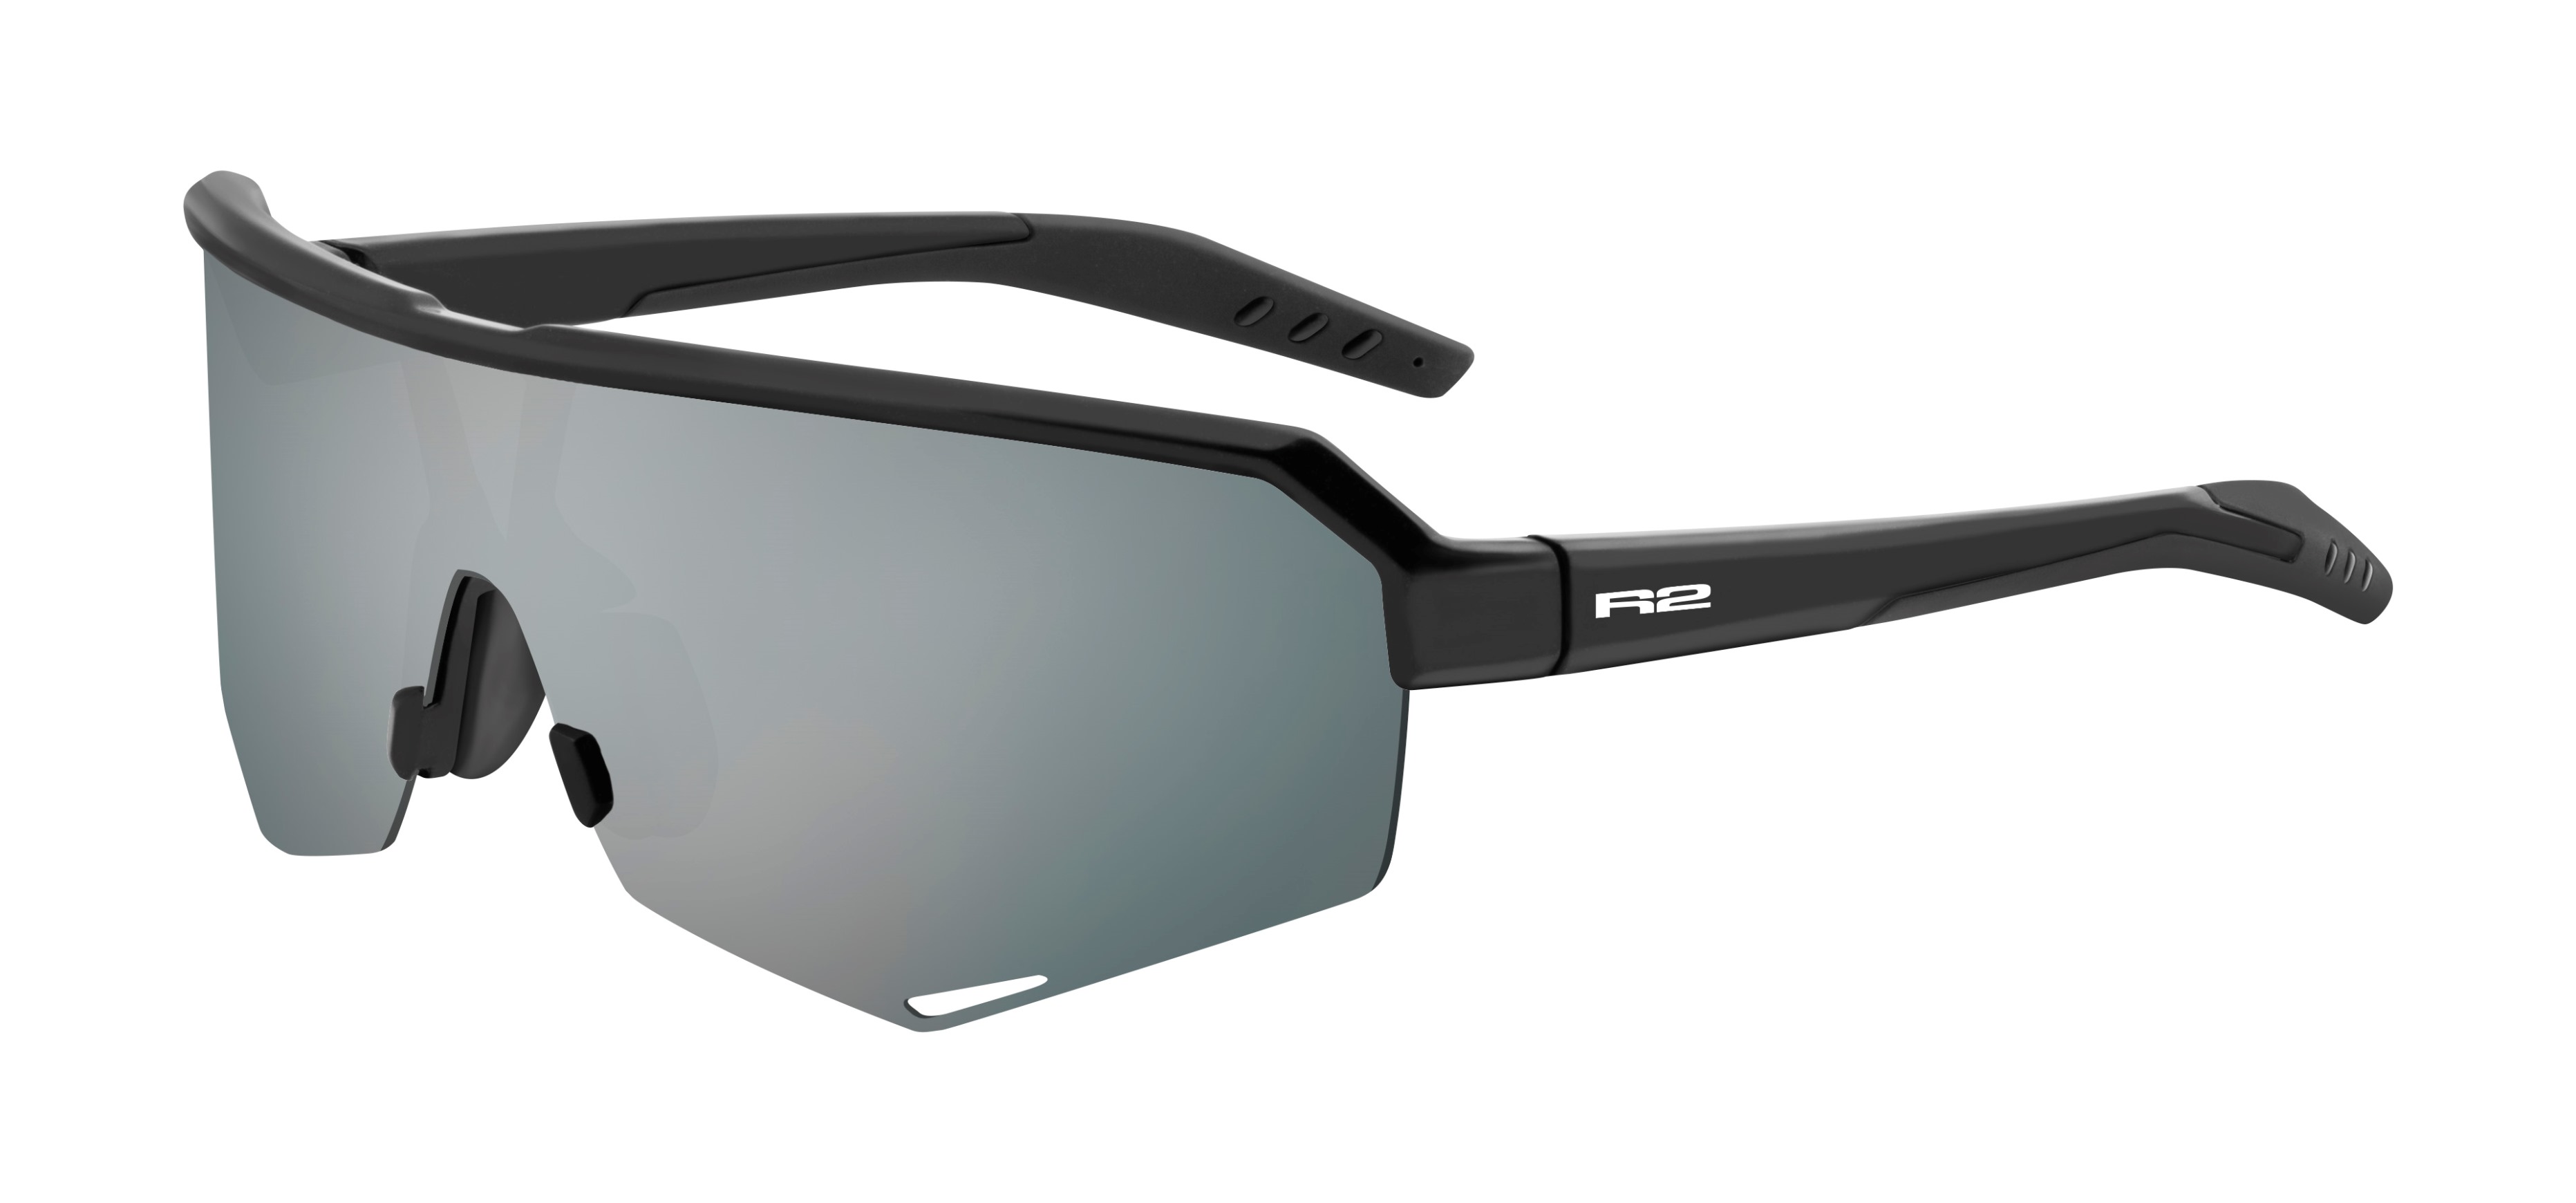 Sport sunglasses R2 FLUKE AT100E